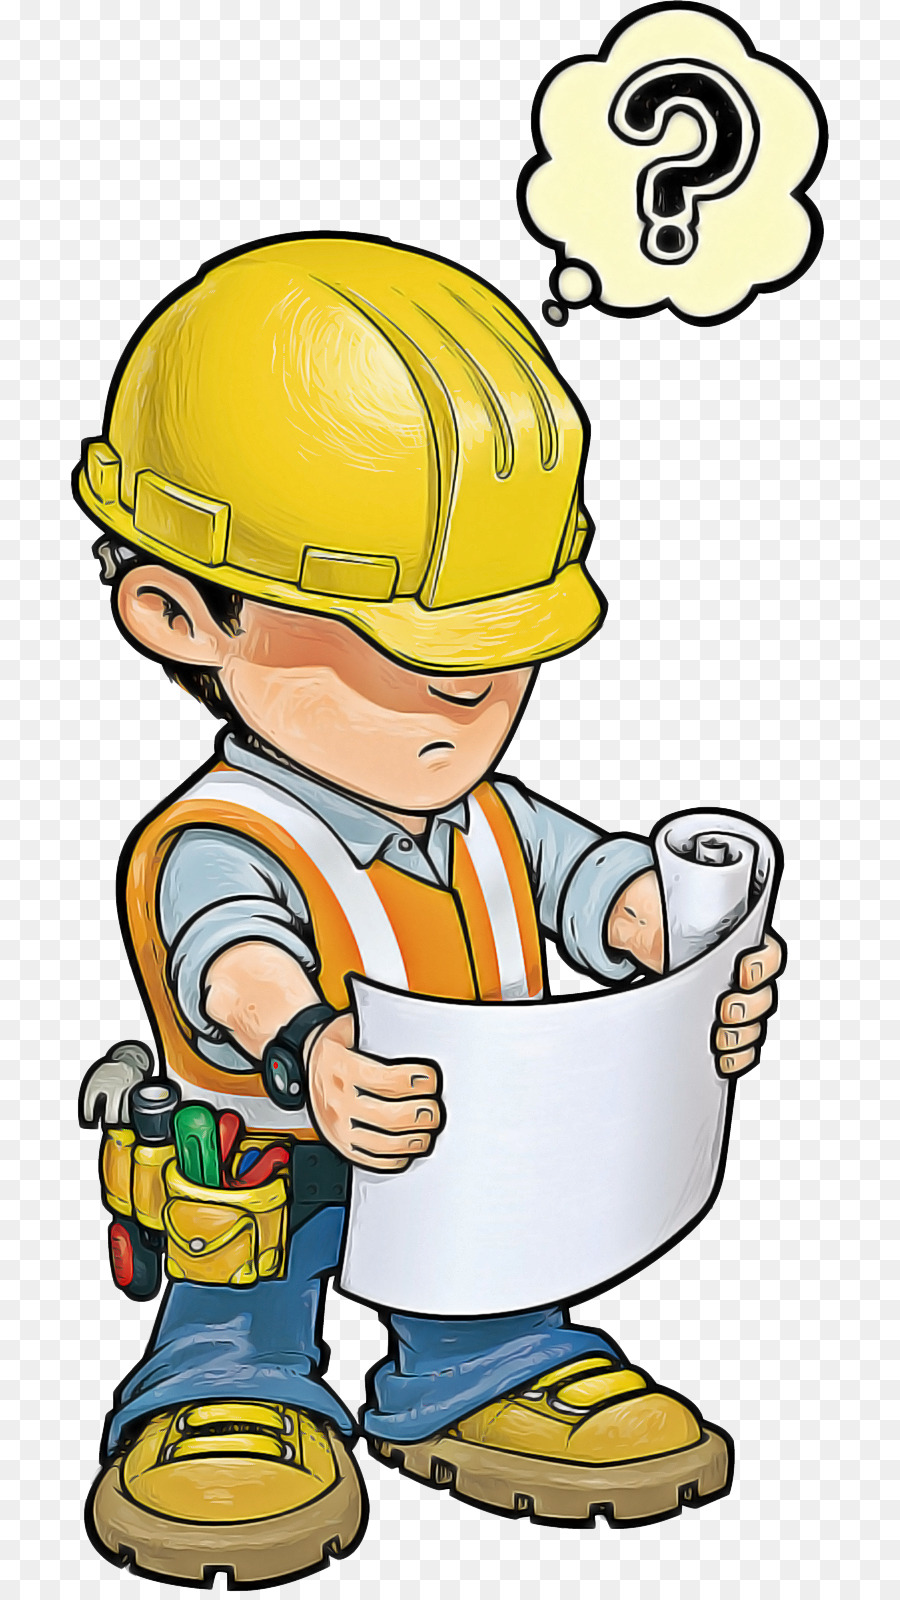 clip art cartoon construction worker hard hat headgear png download -  759*1592 - Free Transparent Cartoon png Download. - CleanPNG / KissPNG